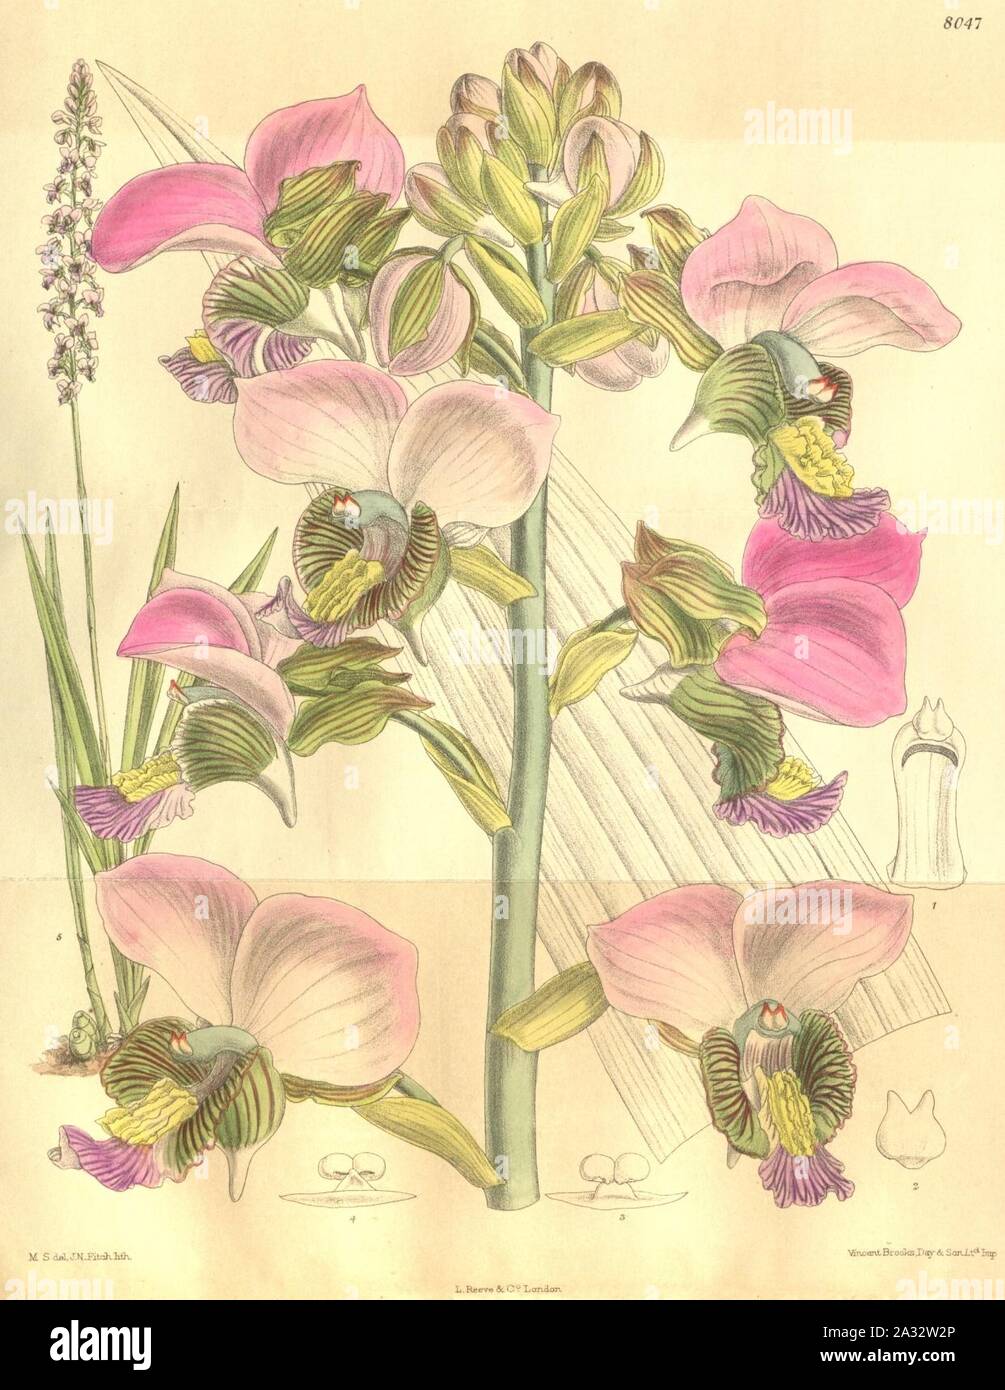 Eulophia rosea (as Lissochilus mahonii, spelled Lissochilus mahoni) - Curtis' 131 (Ser. 4 no. 1) pl. 8047. Stock Photo